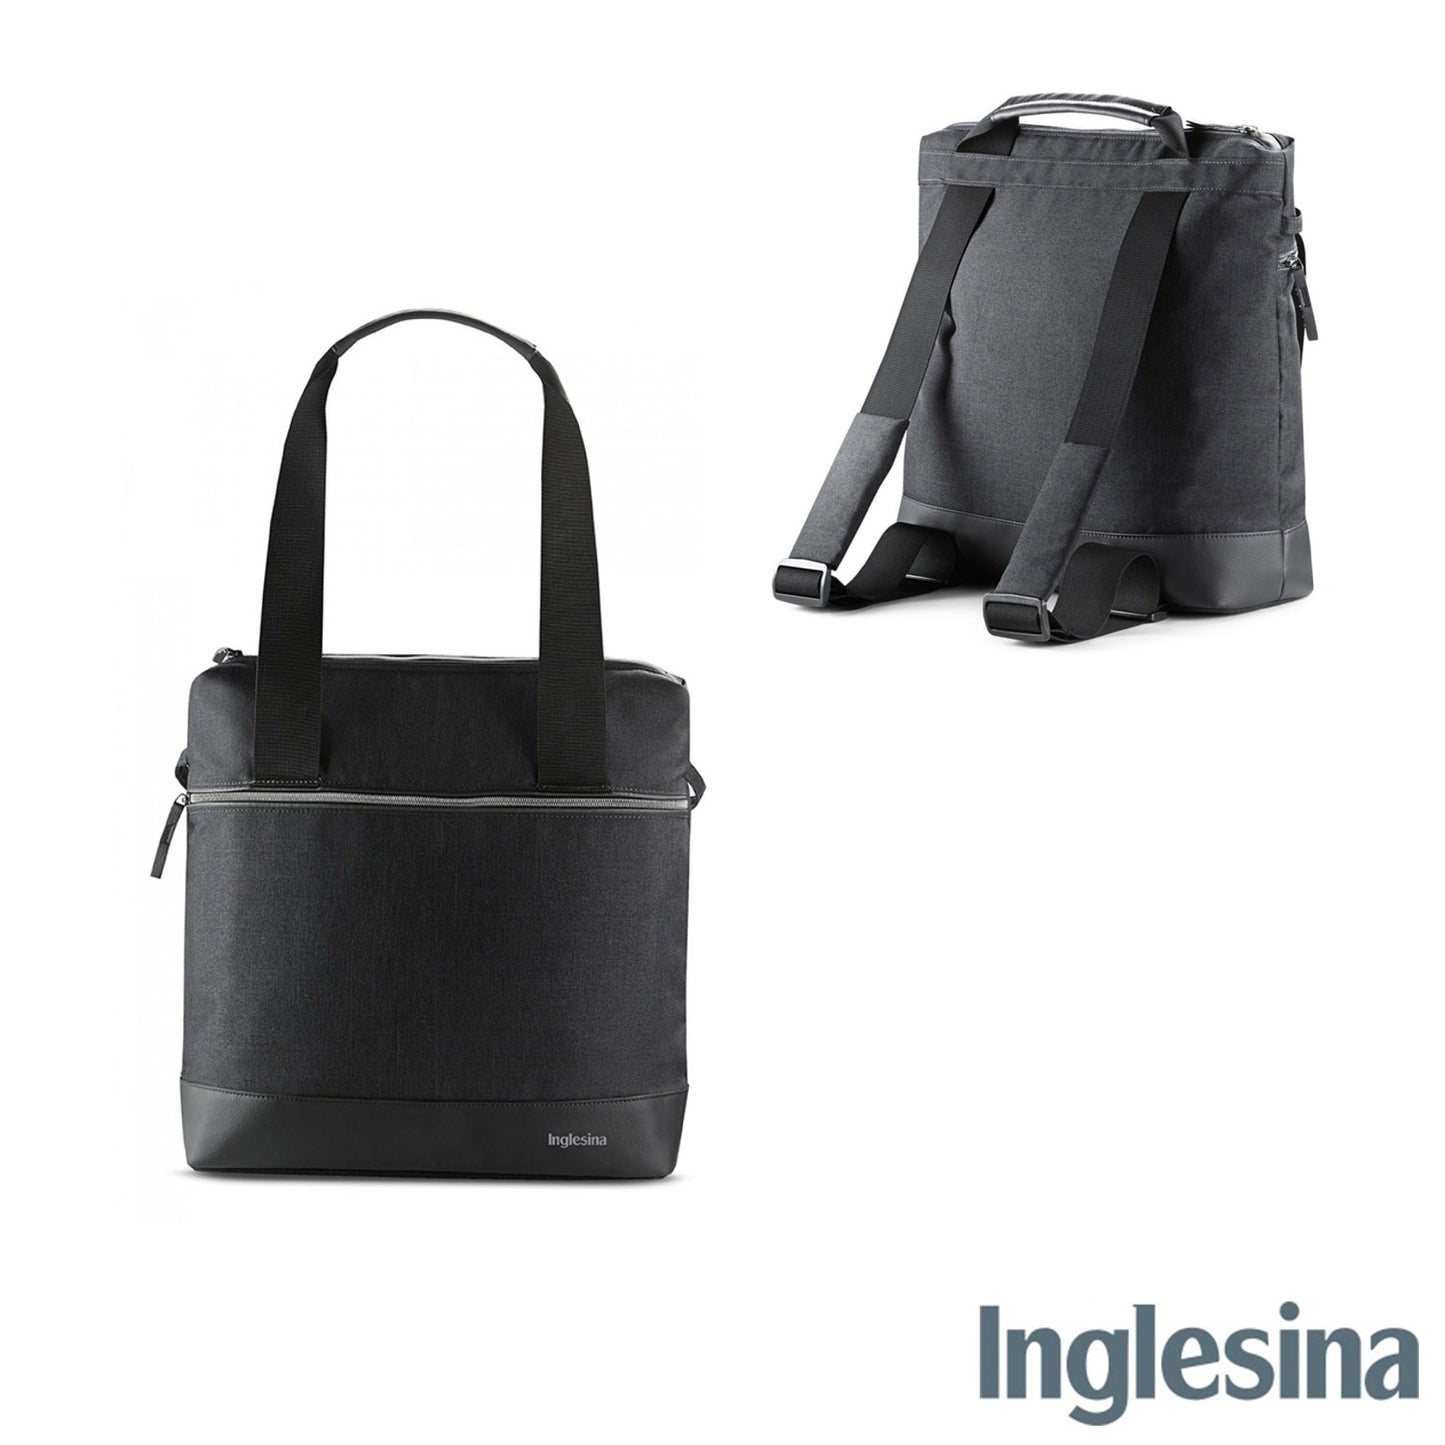 Inglesina - Back Bag Bag Backpack